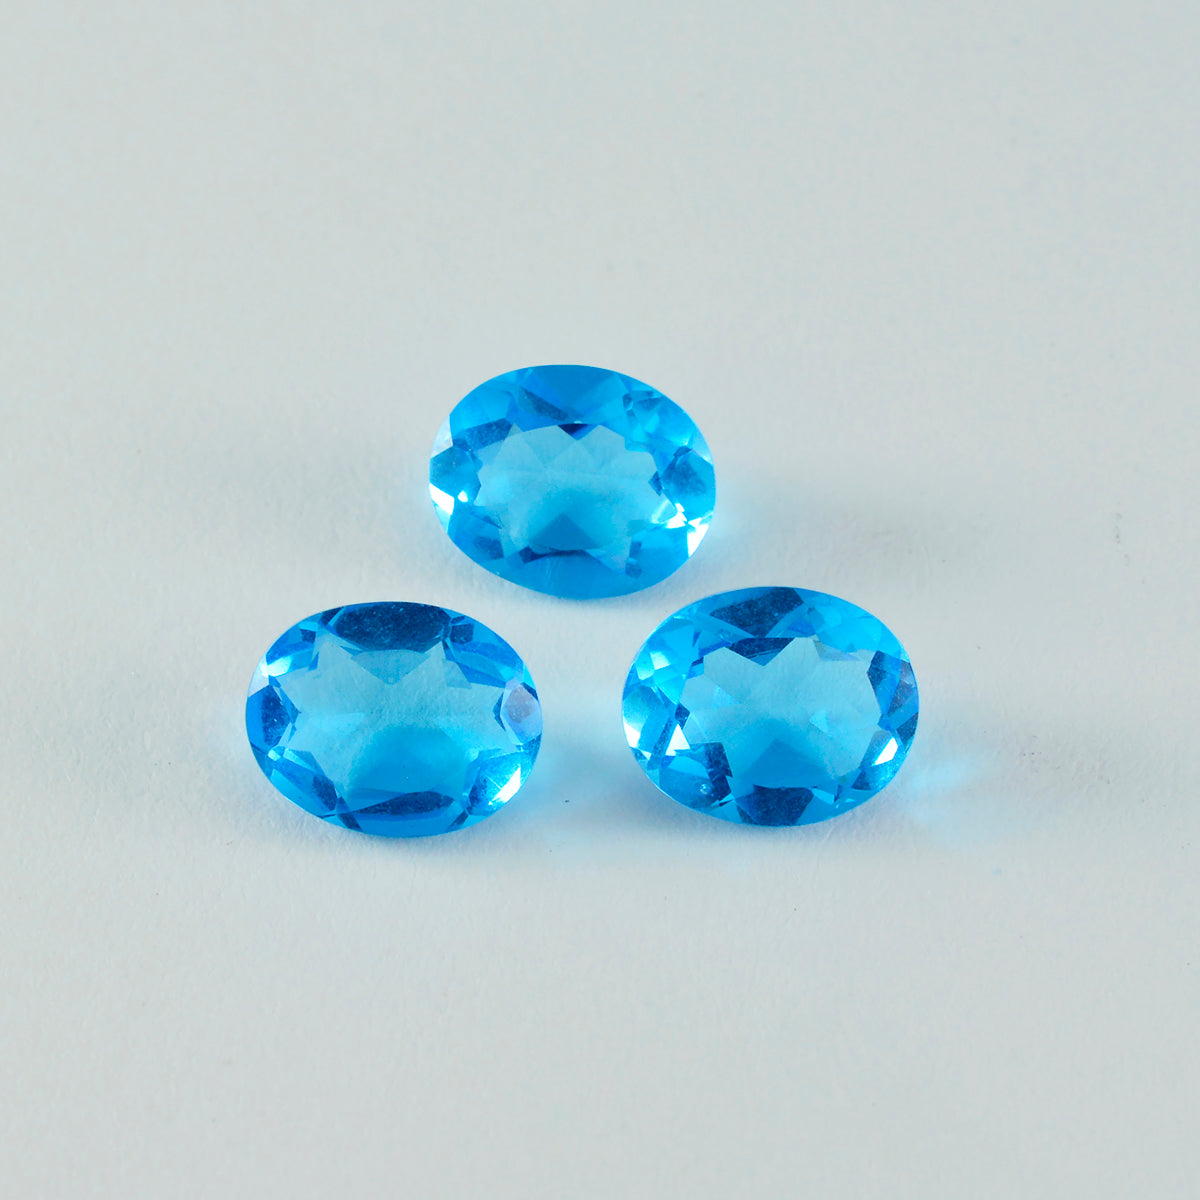 Riyogems 1PC Blue Topaz CZ Faceted 10x14 mm Oval Shape good-looking Quality Loose Gemstone